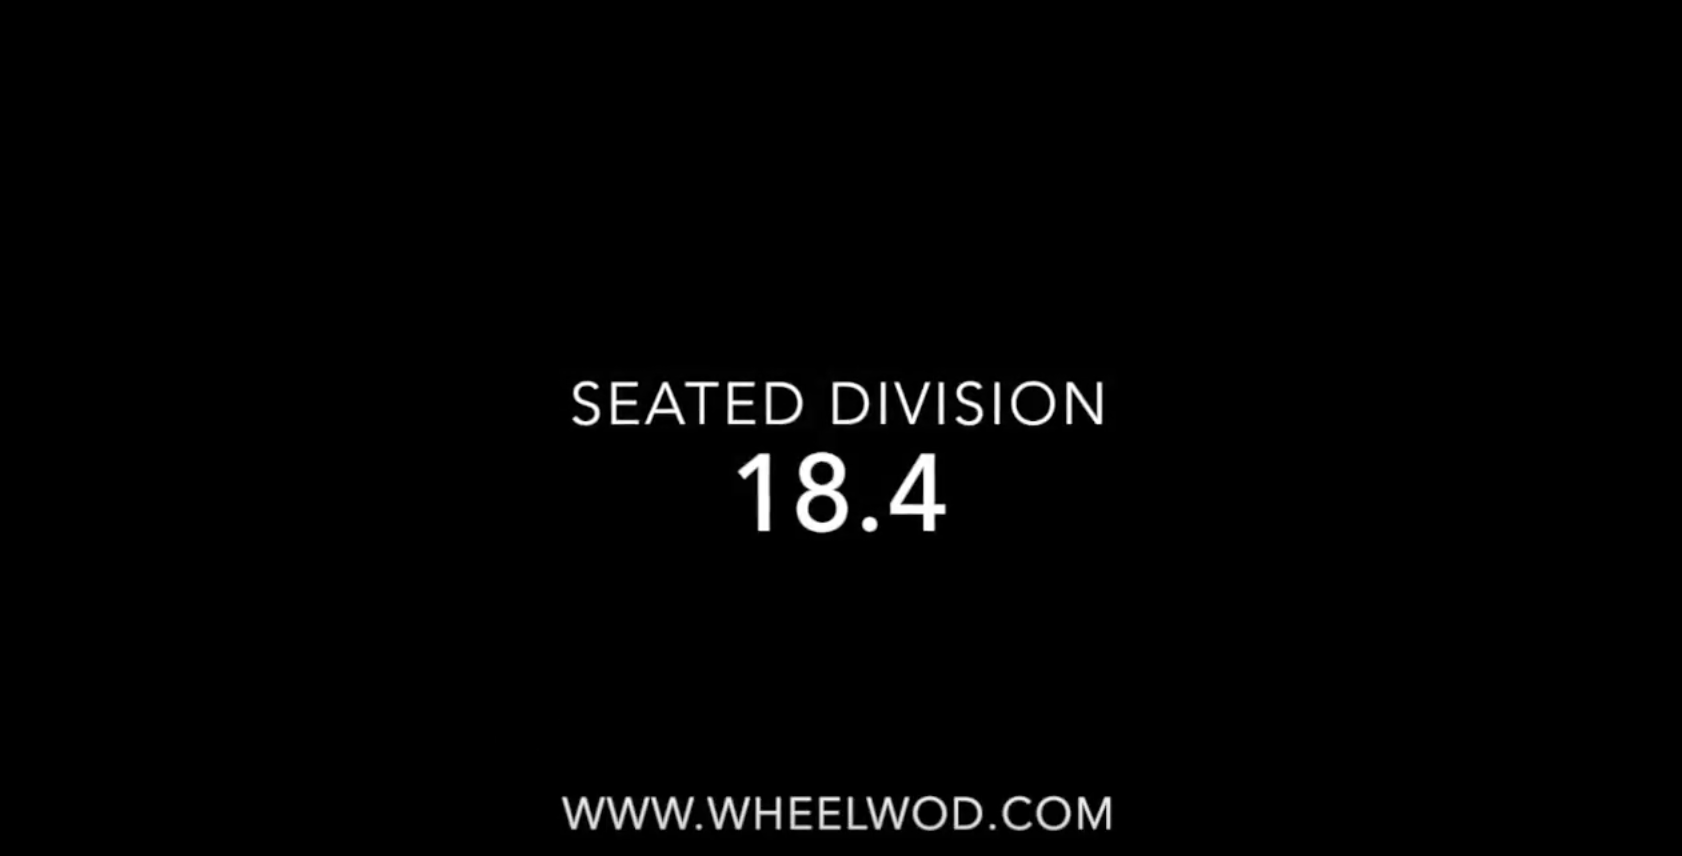 WHEELWOD OPEN SEATED 18.4